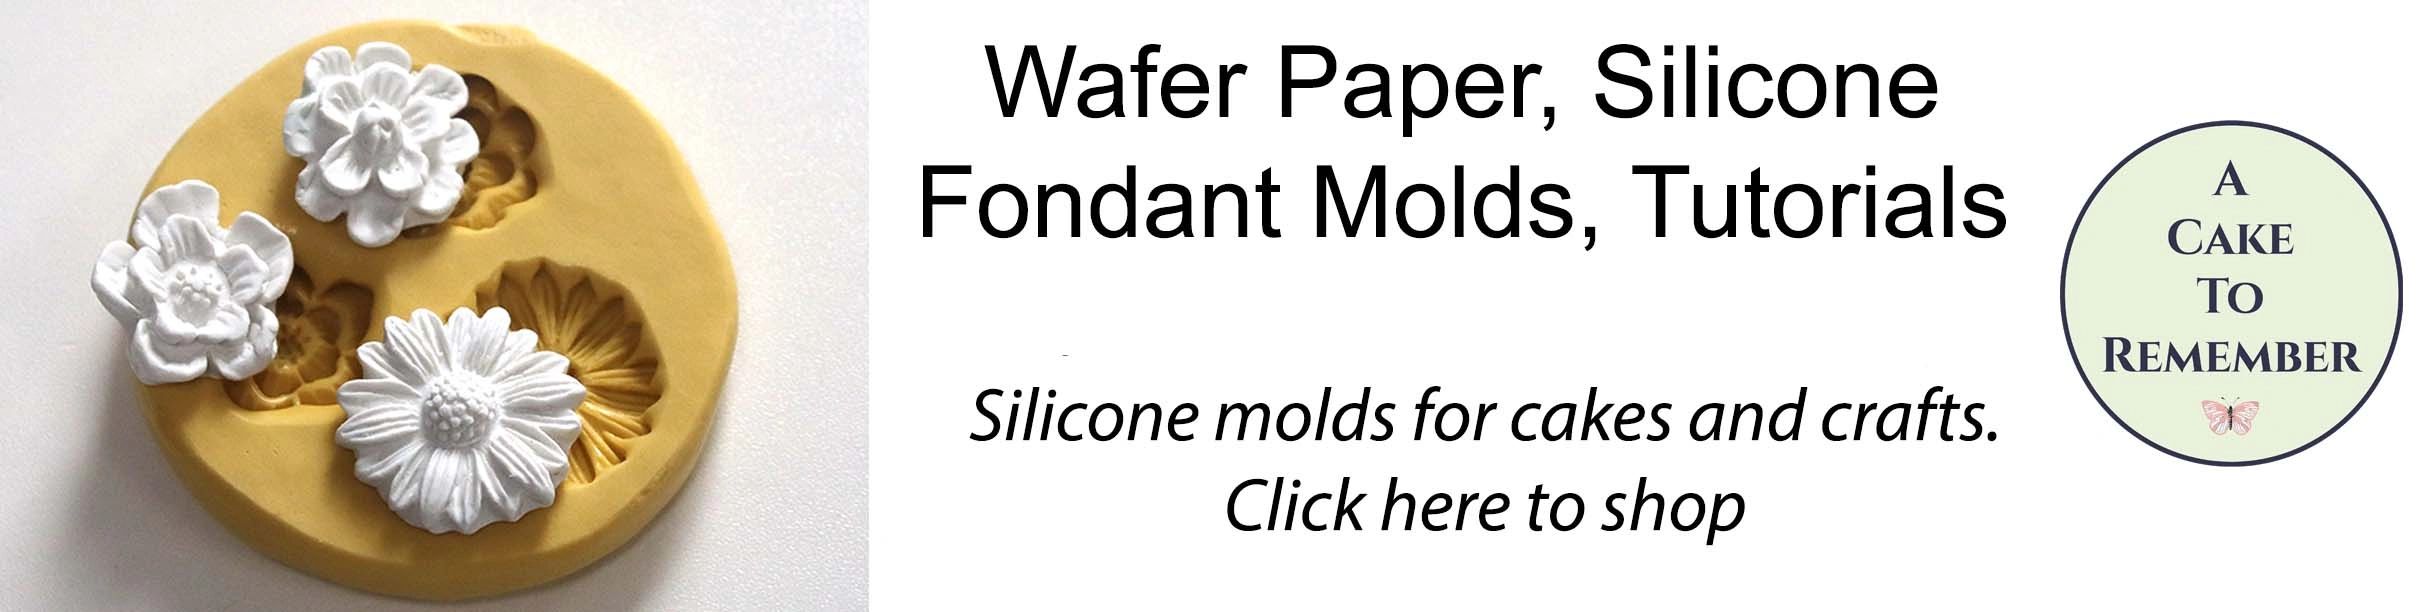 Silicone Fondant Molds - How to Use Correctly